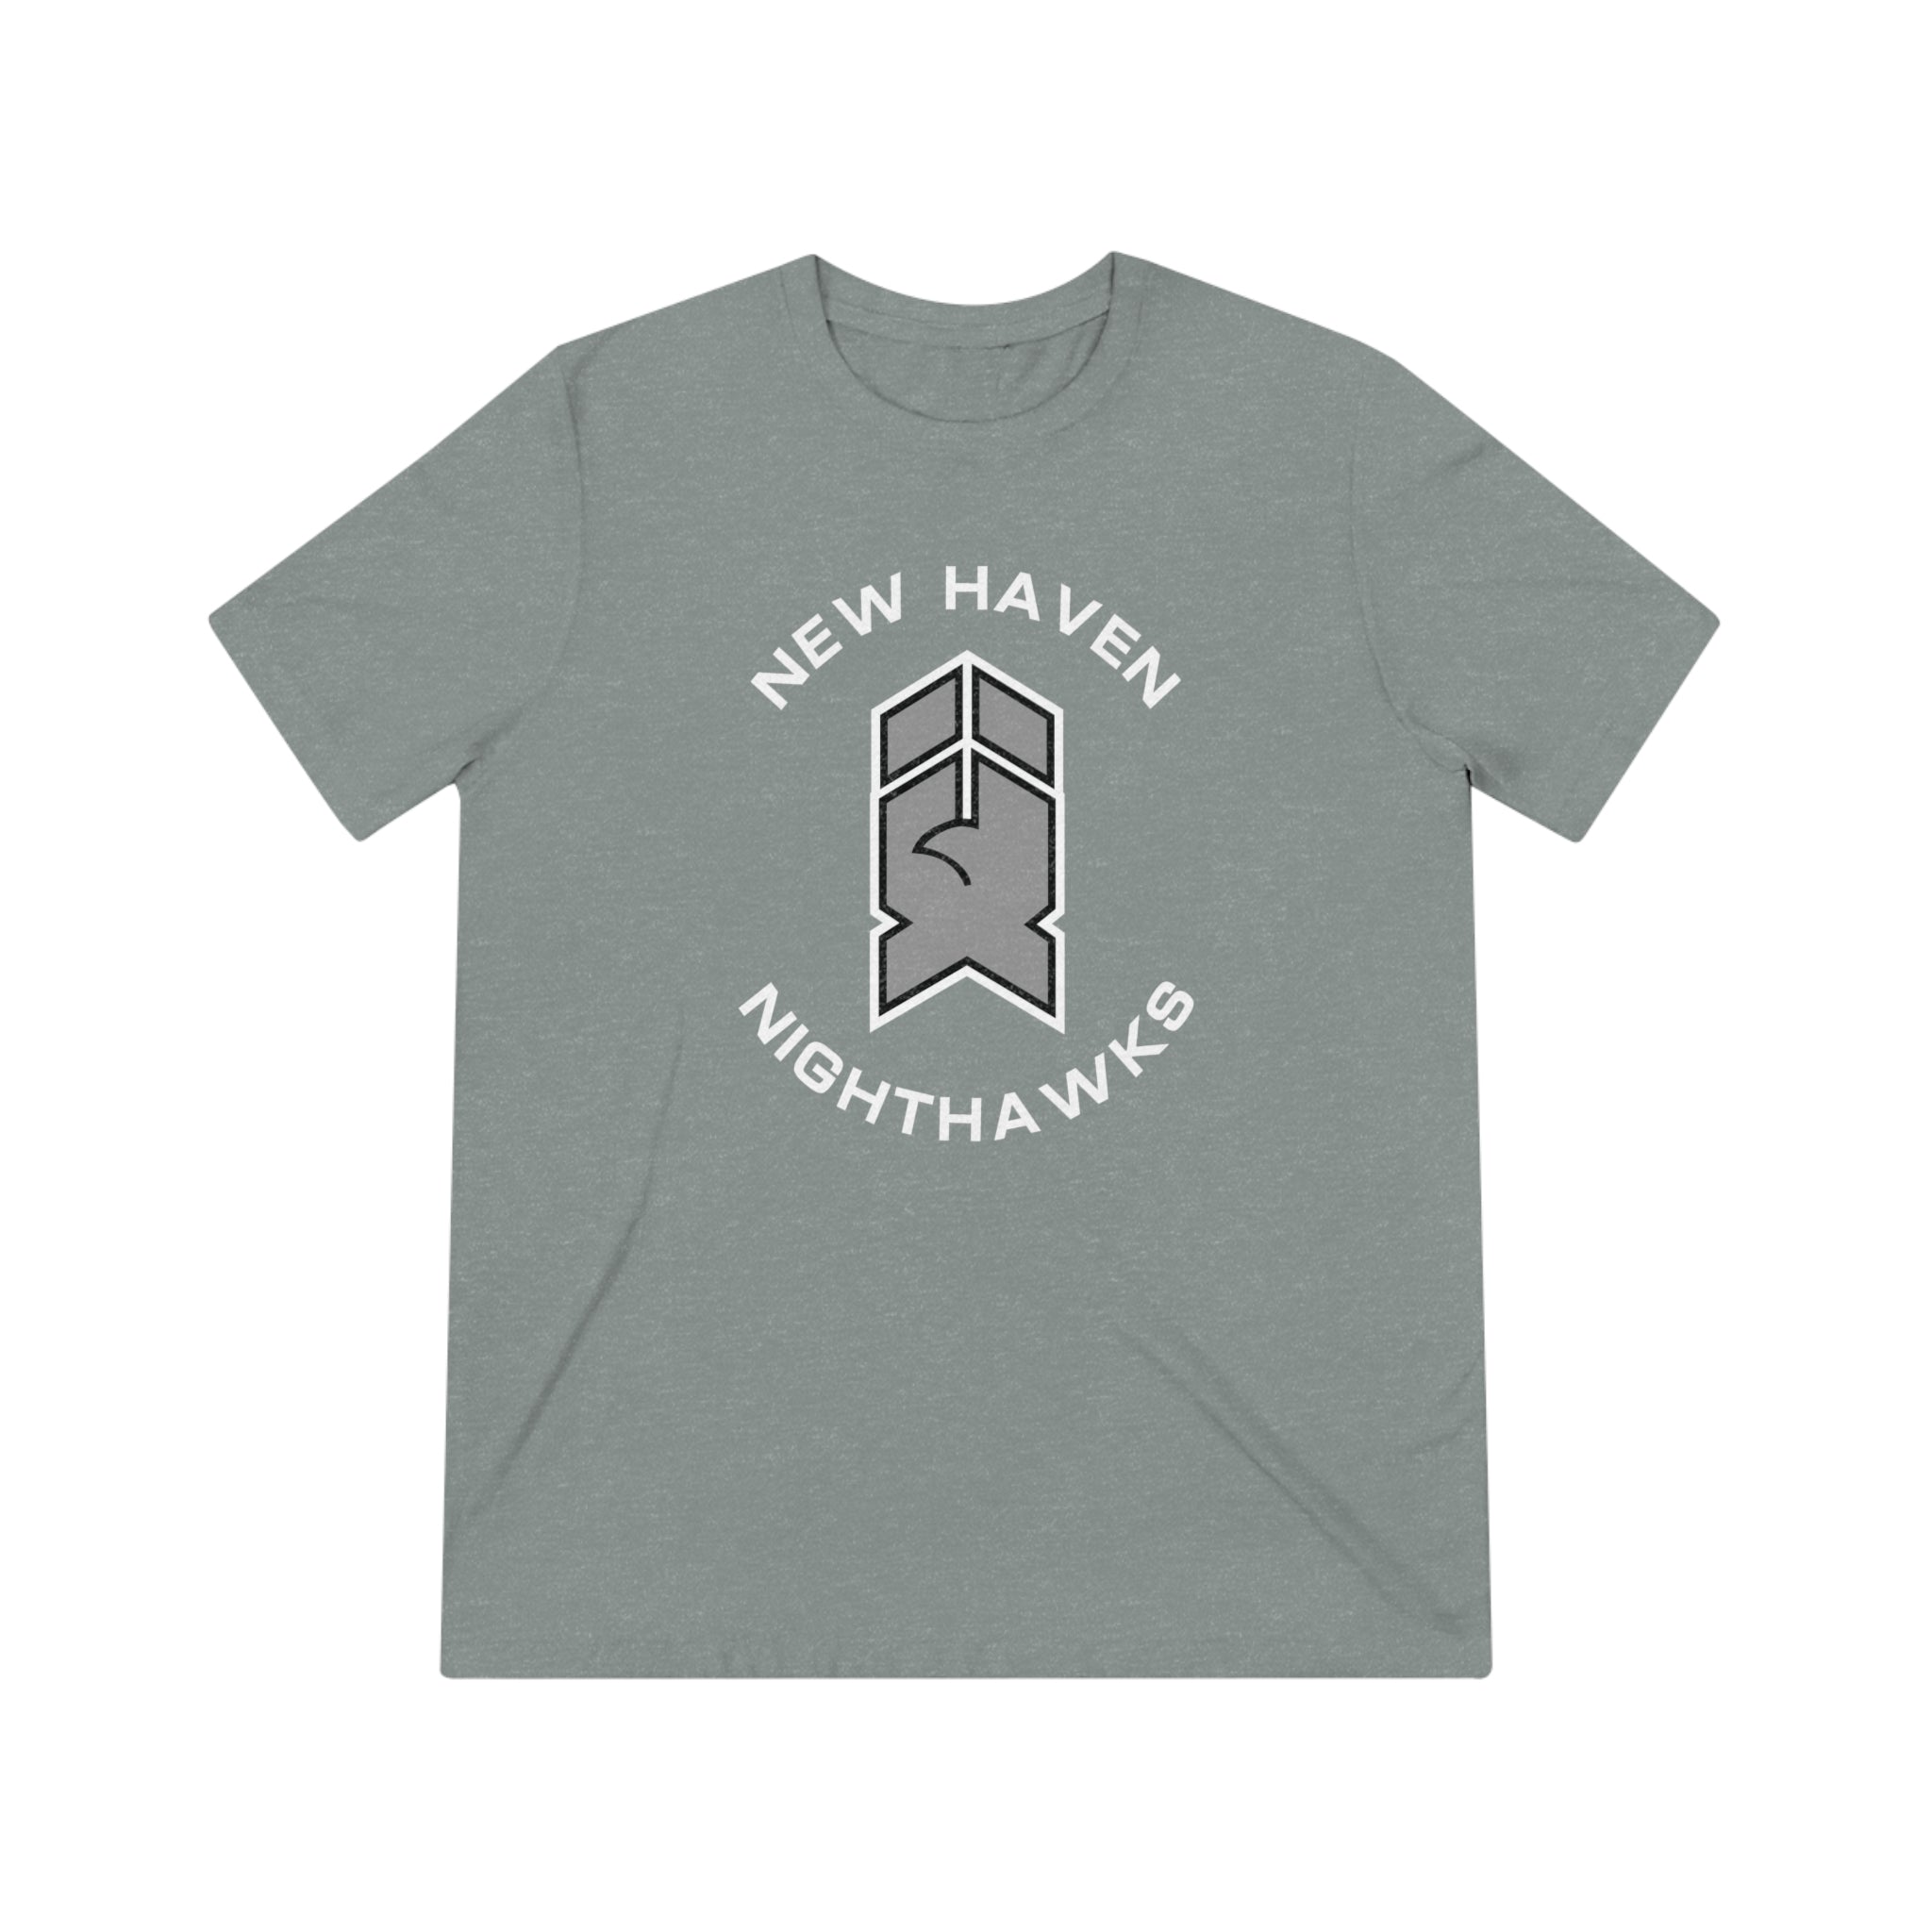 New Haven Nighthawks 1990s T-Shirt (Tri-Blend Super Light)